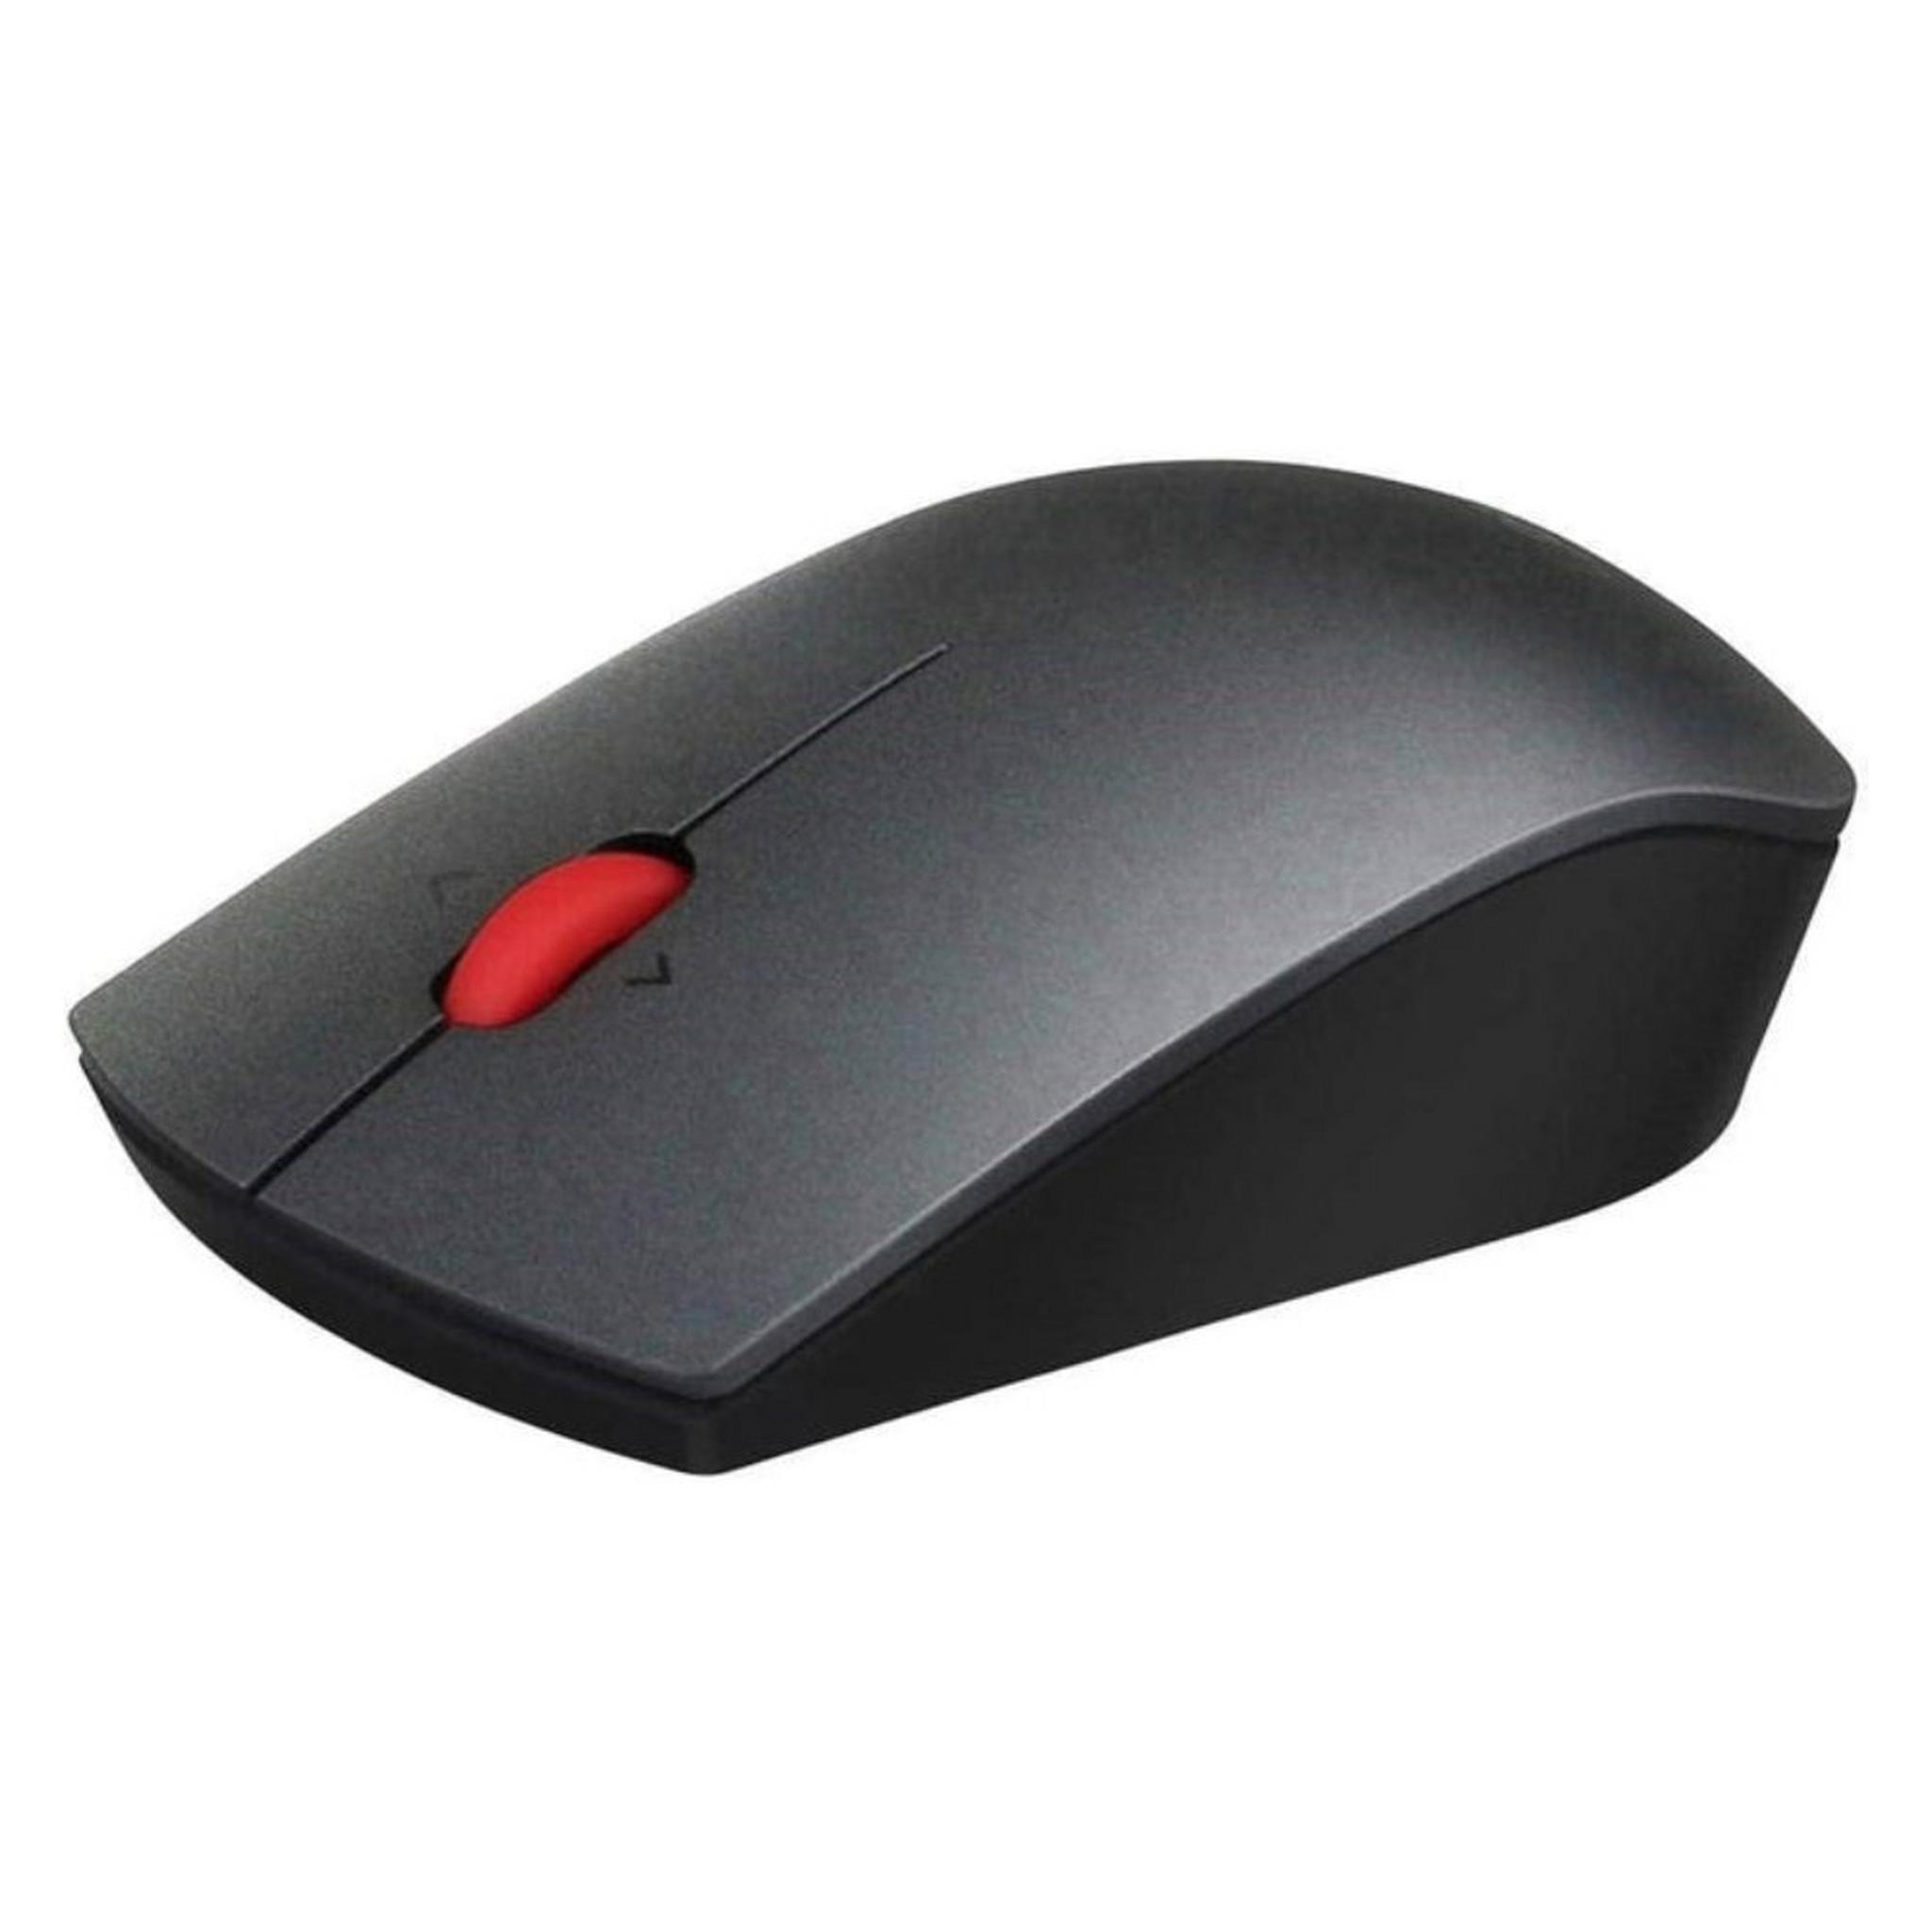 Lenovo 150 Wireless Mouse, LED optical sensor, 4Y51M70369 – Black